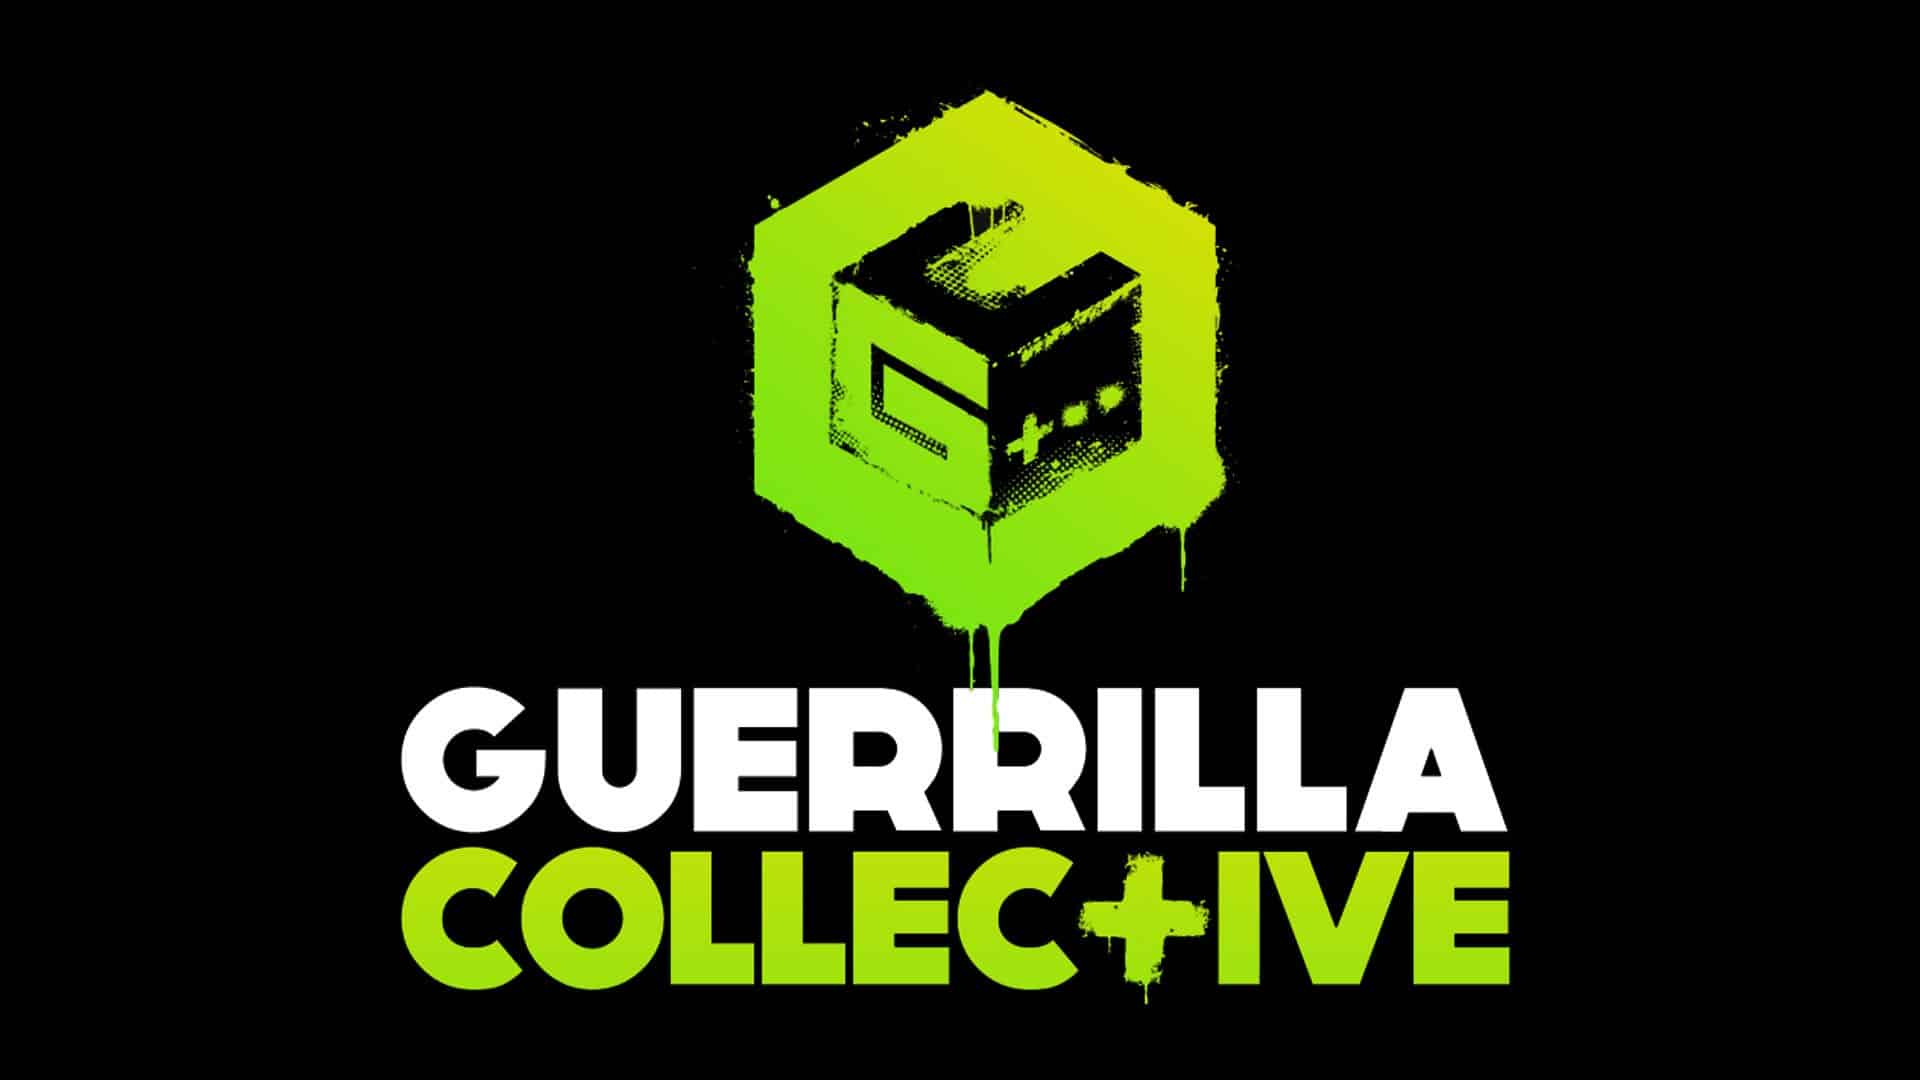 Guerrilla collective 2